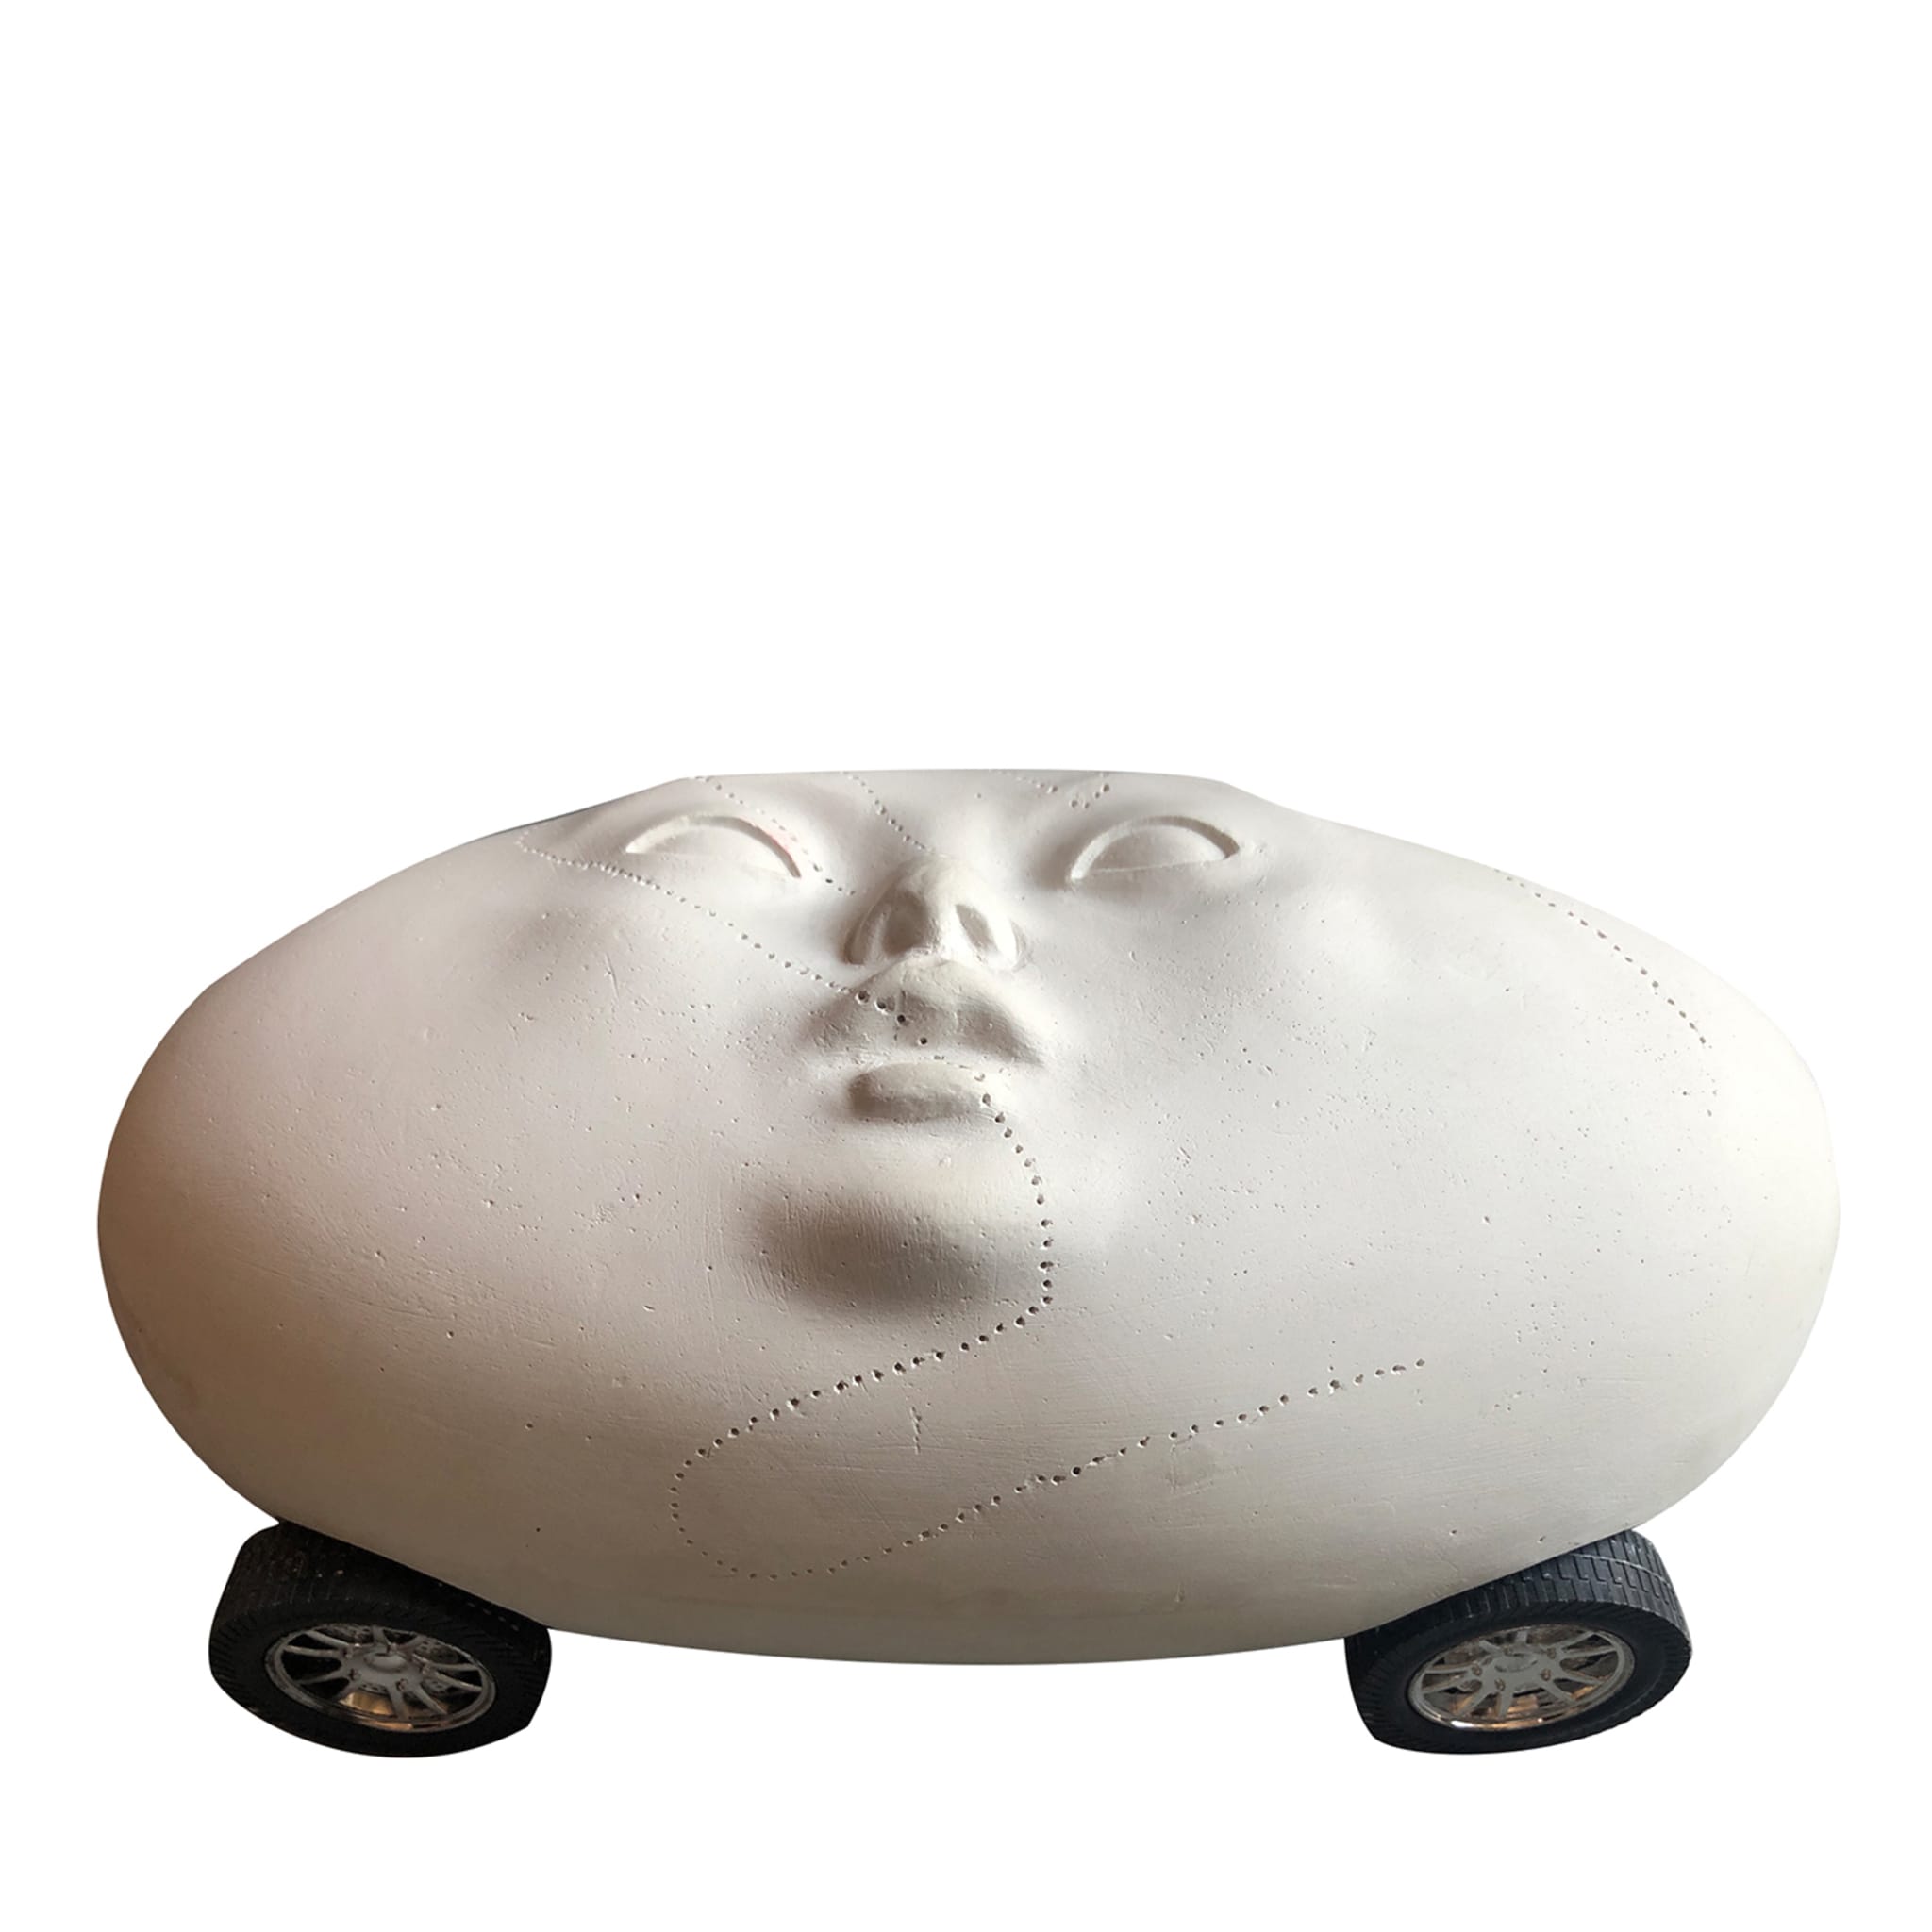 La escultura del coche píldora - Vista principal